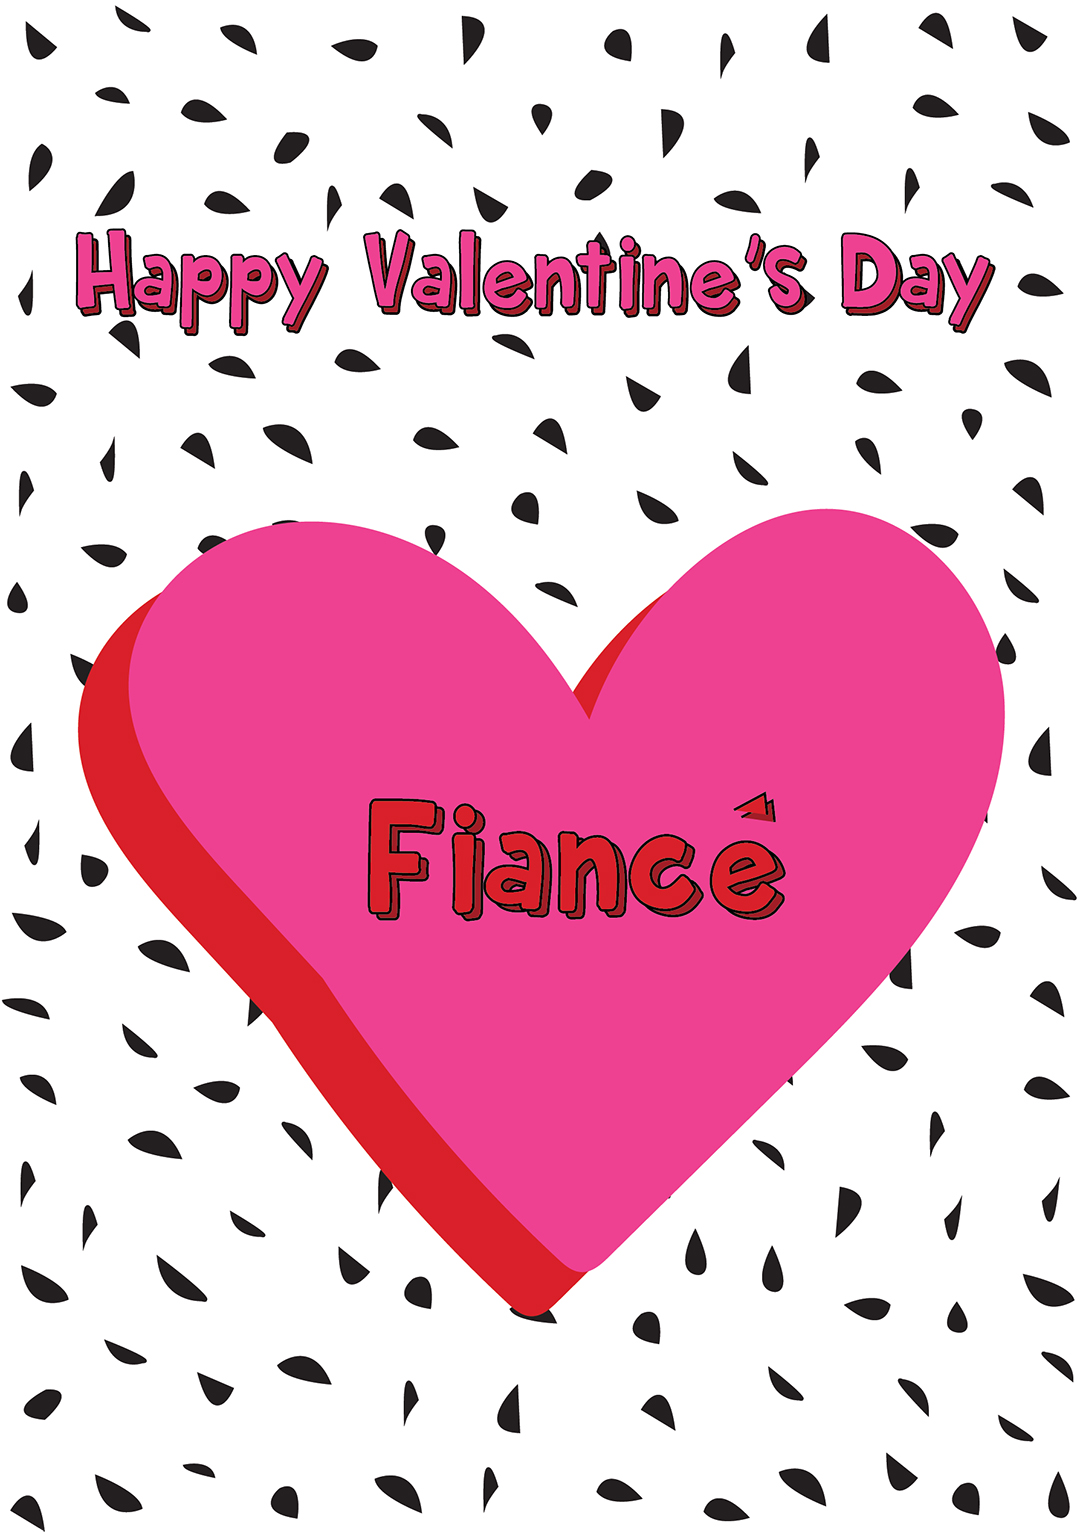 Happy Valentines Day Fiancé - Card